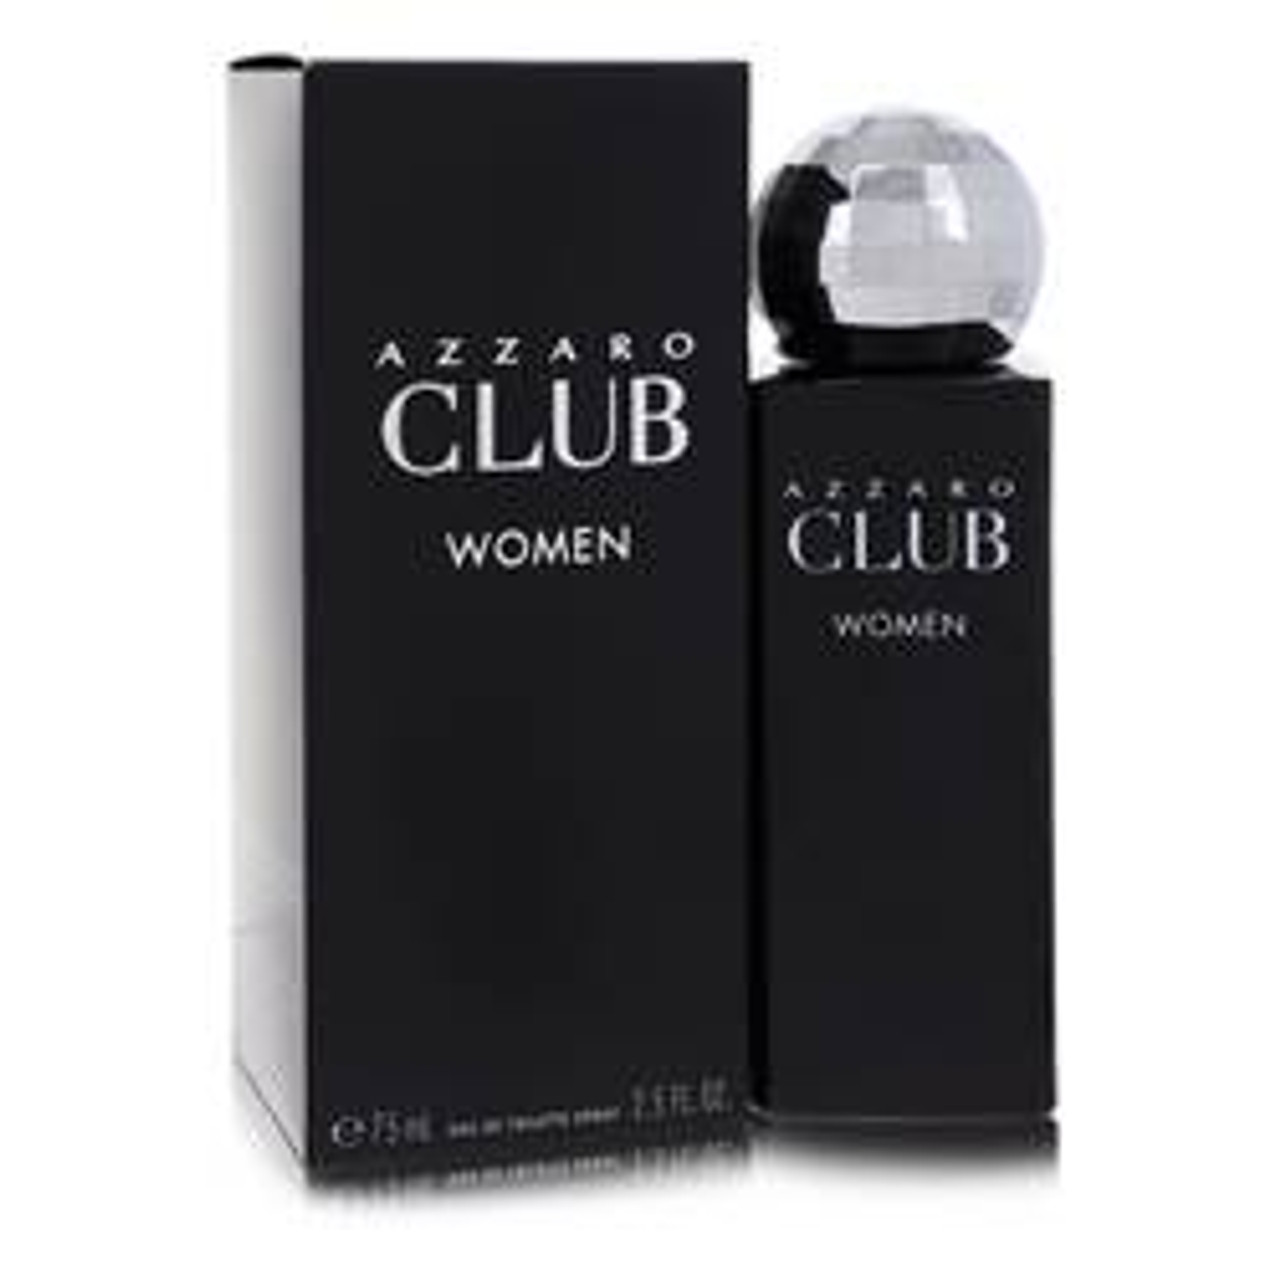 Azzaro Club Perfume By Azzaro Eau De Toilette Spray 2.5 oz for Women - [From 120.00 - Choose pk Qty ] - *Ships from Miami